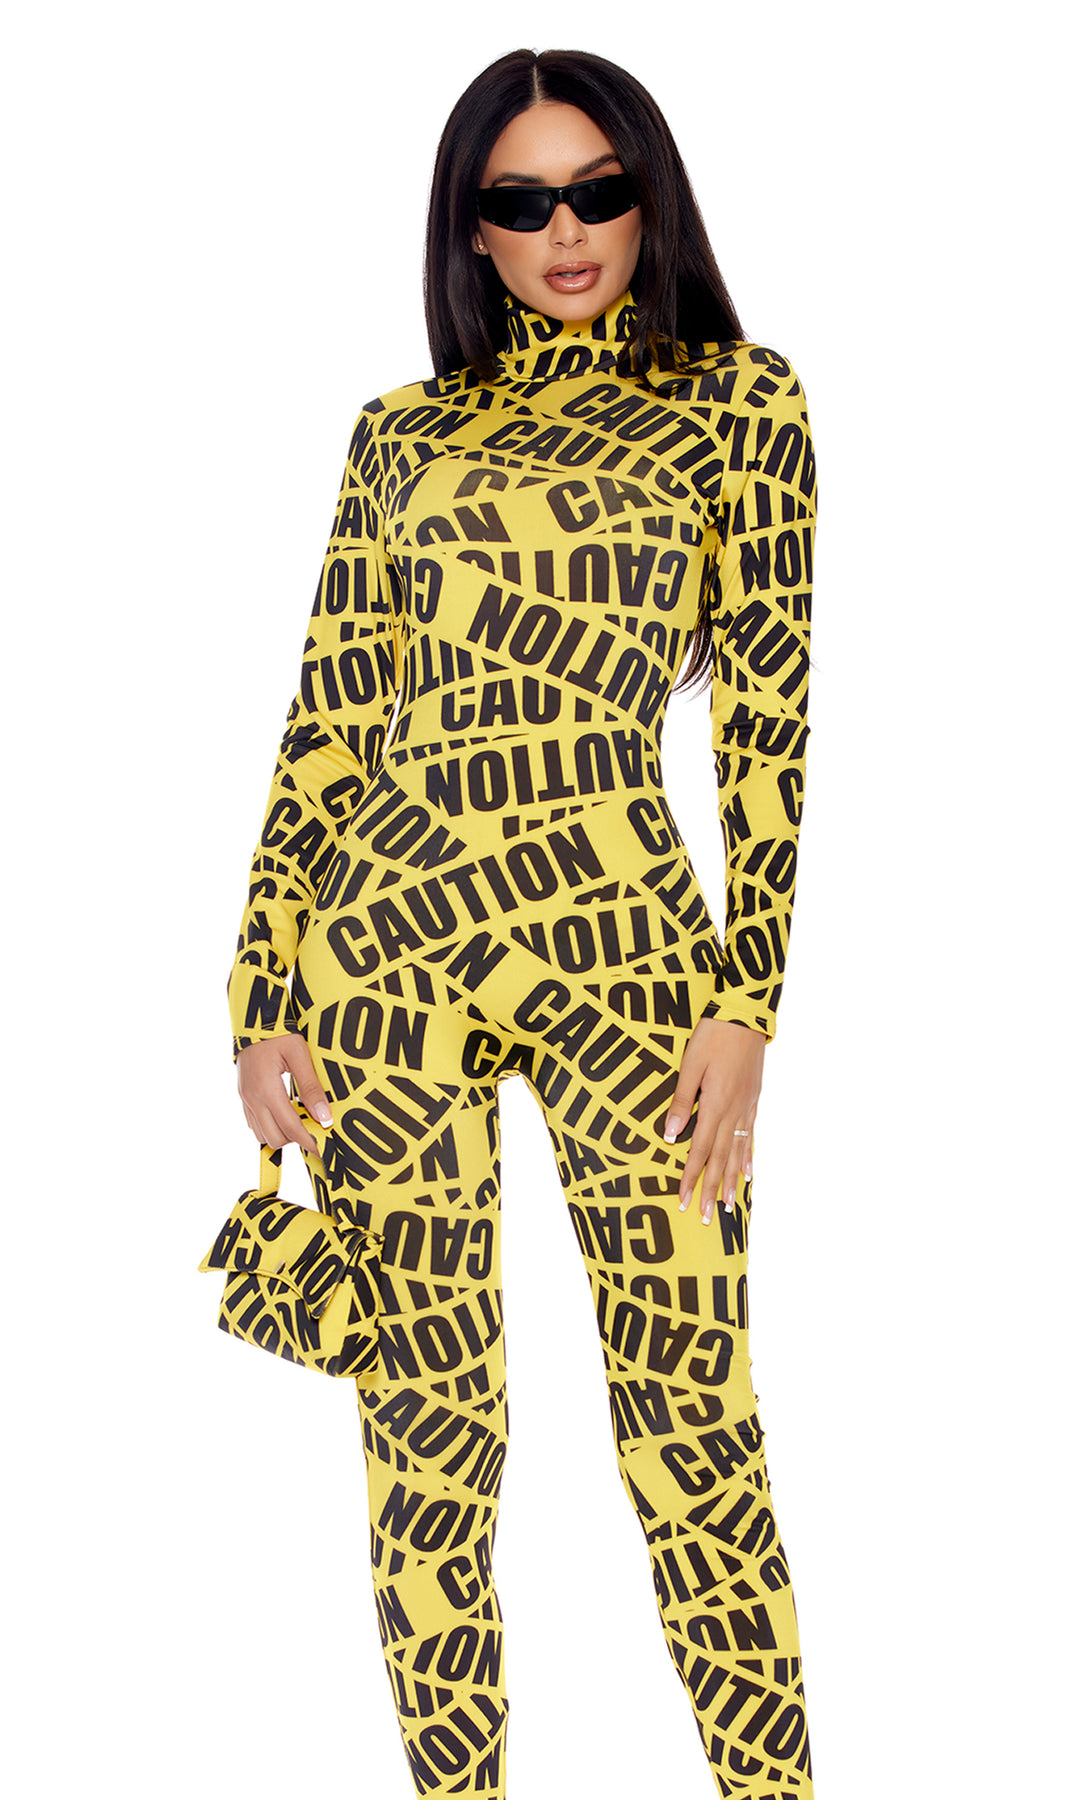 Caution Sexy Caution Tape Costume